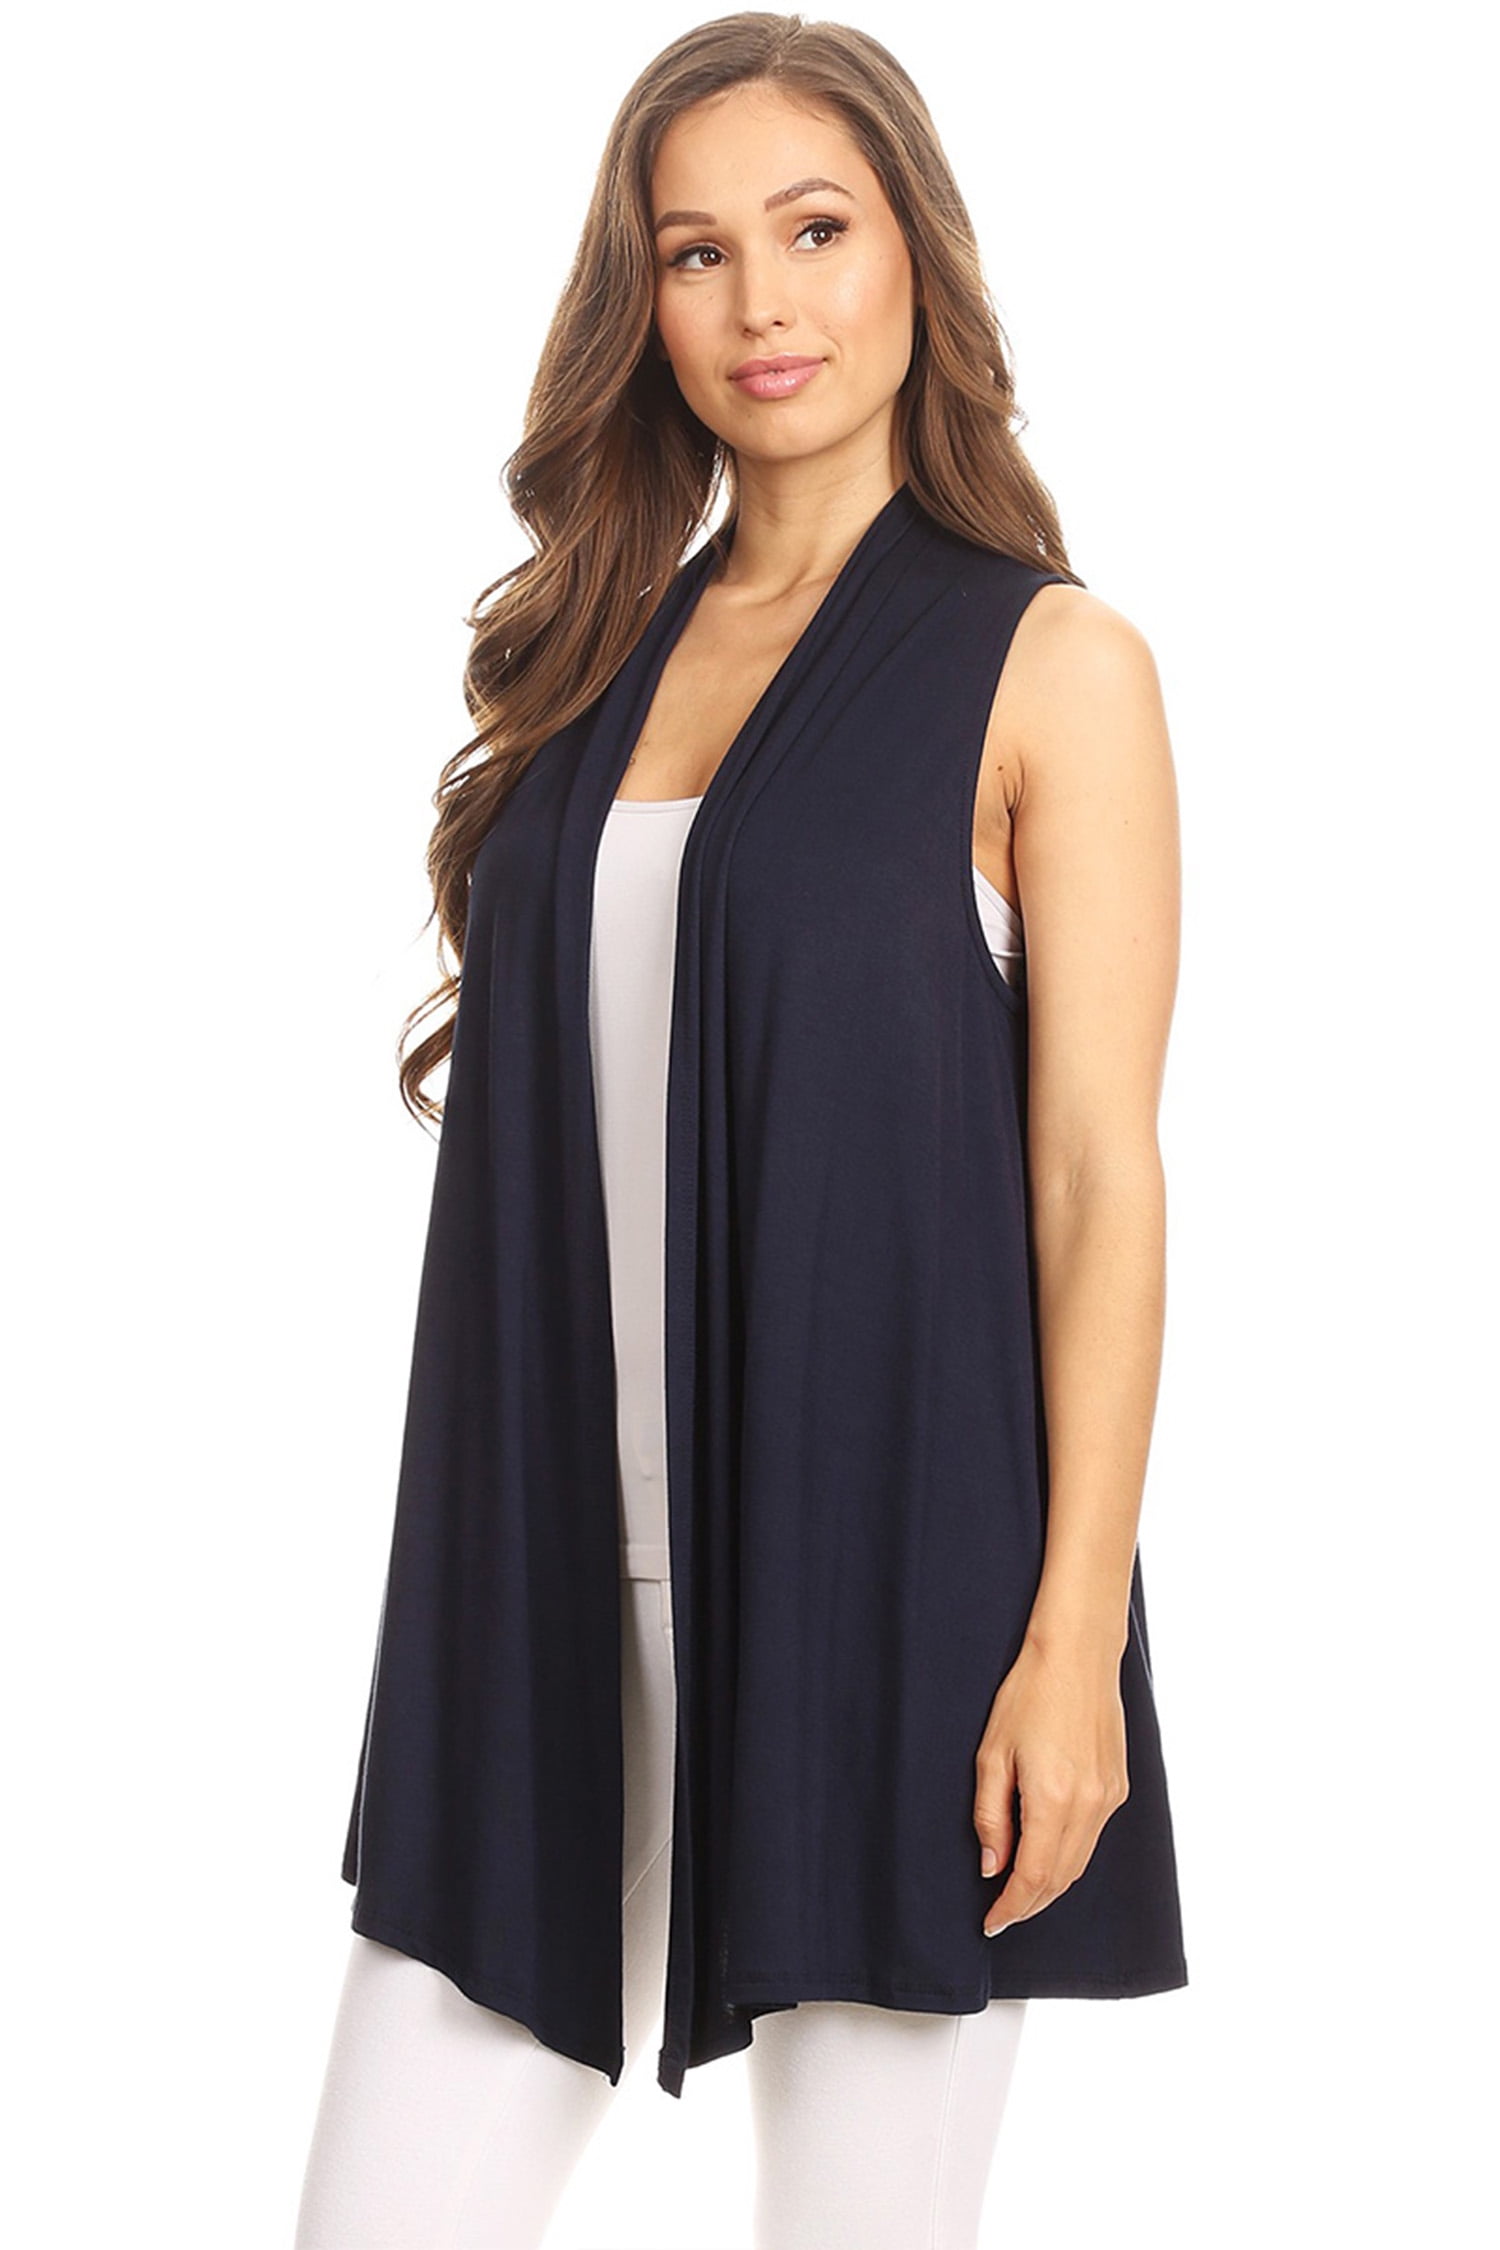 Women's Sleeveless Draped Open Front Cardigan Vest Made in USA - Walmart.com